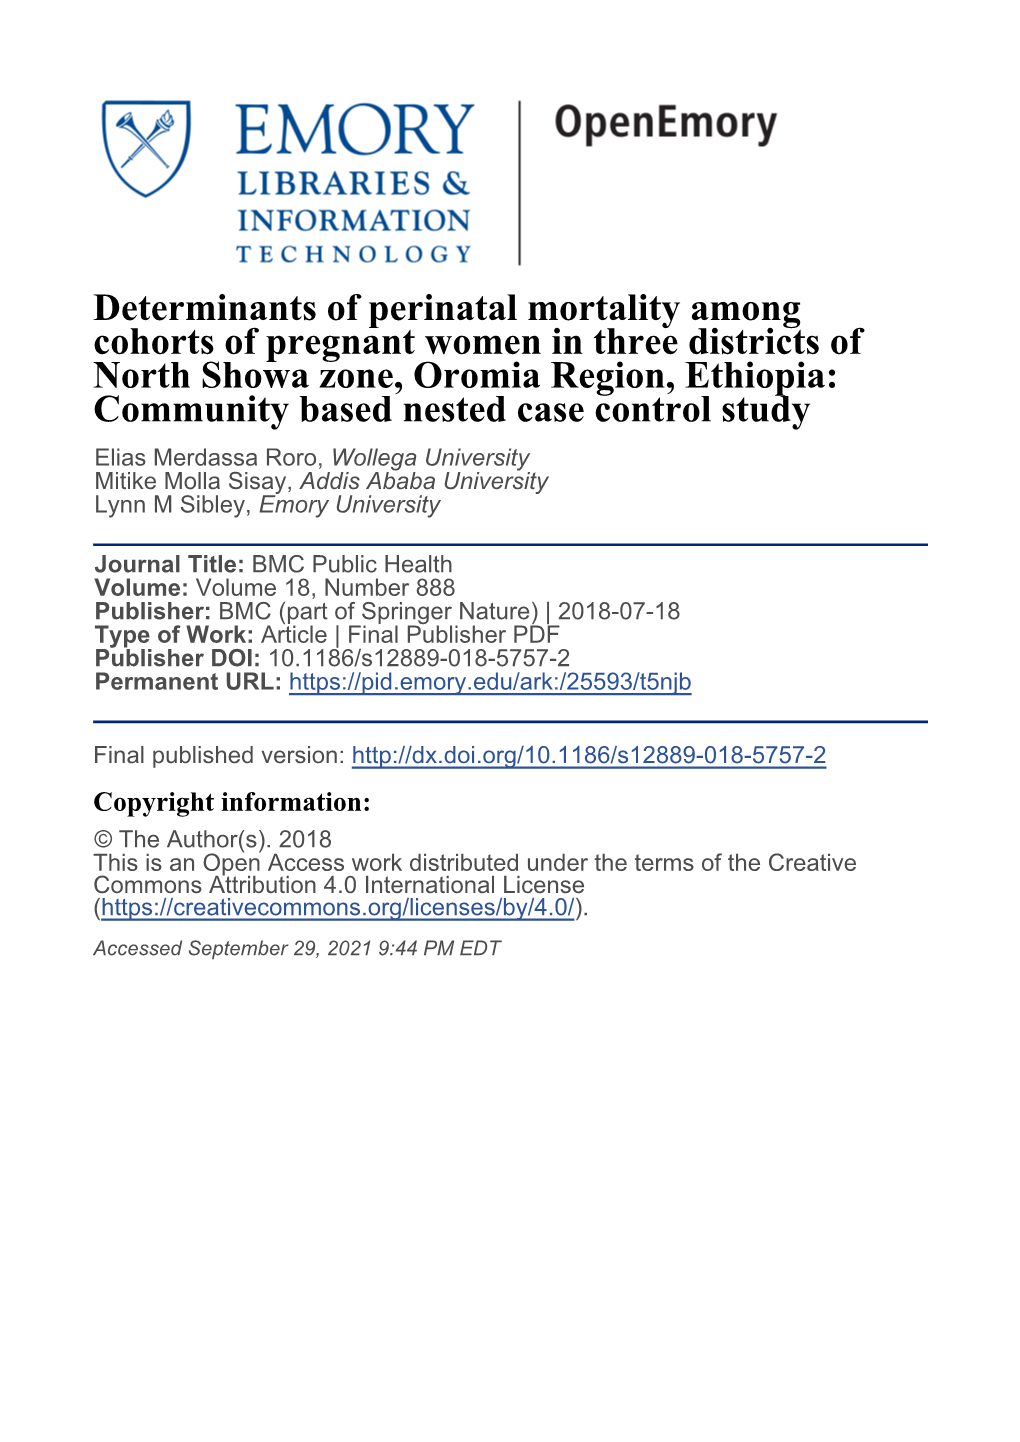 Determinants of Perinatal Mortality Among Cohorts